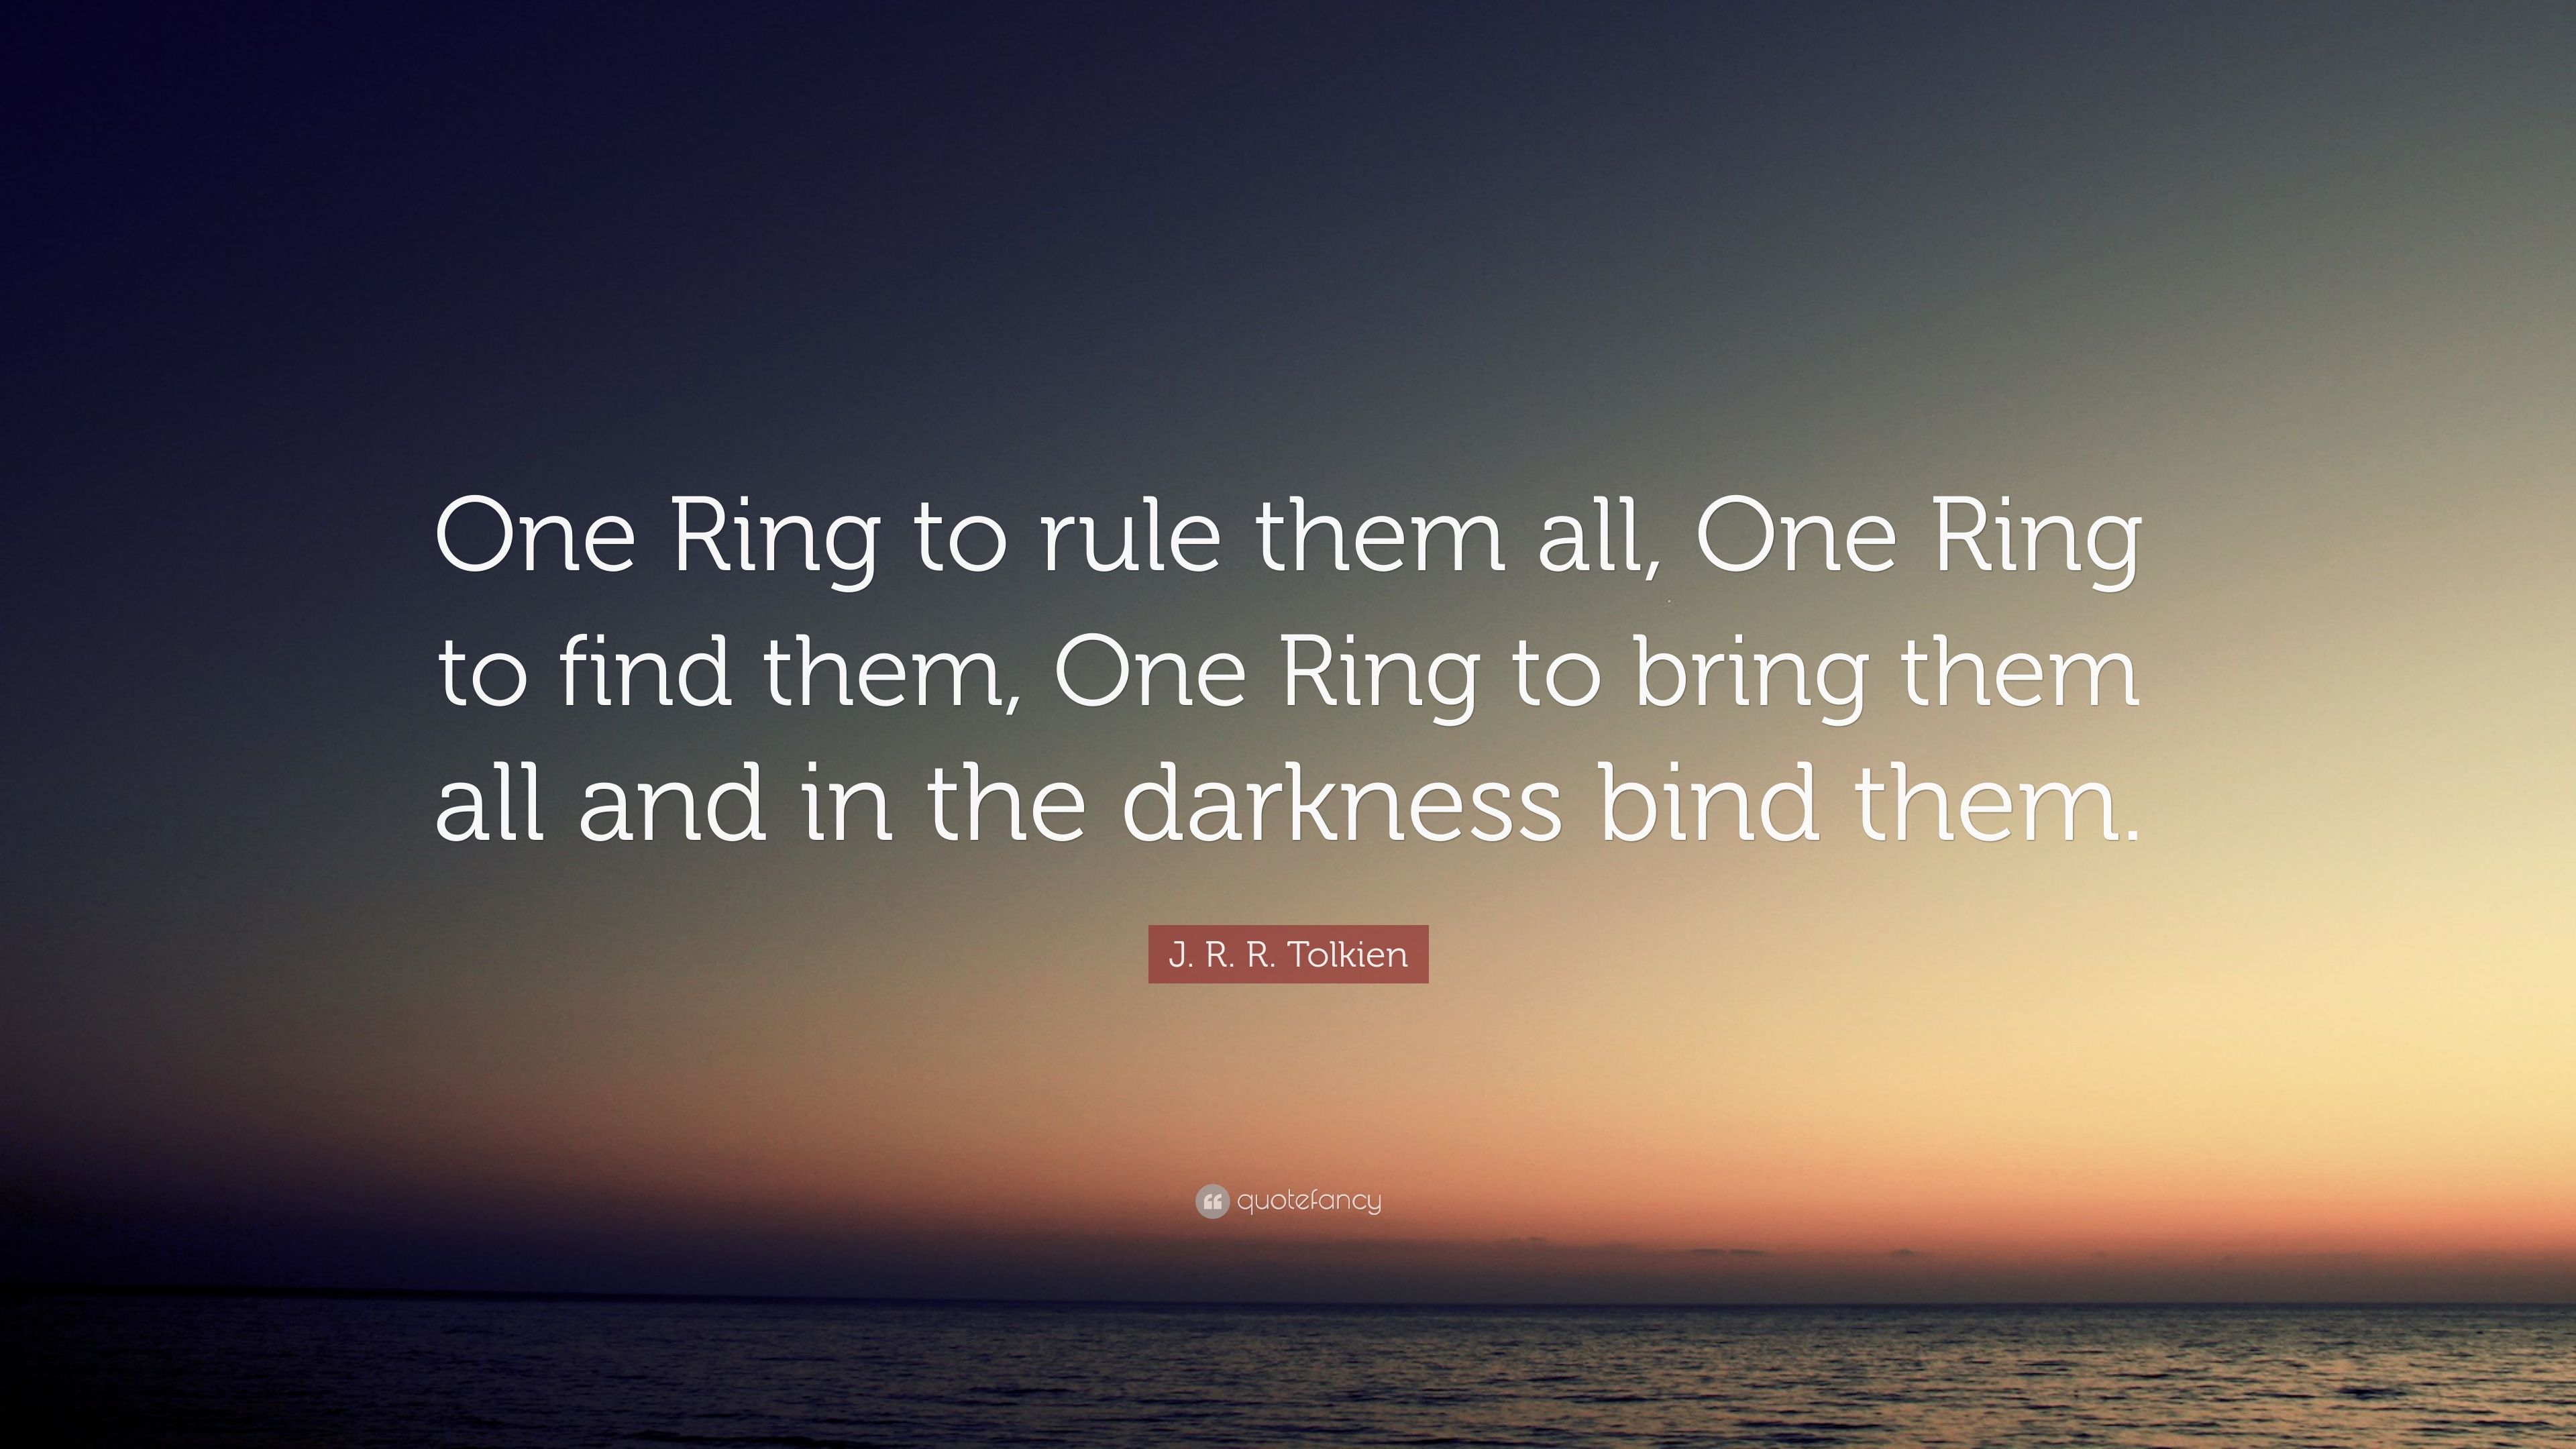 J. R. R. Tolkien Quotes (2021 Update)